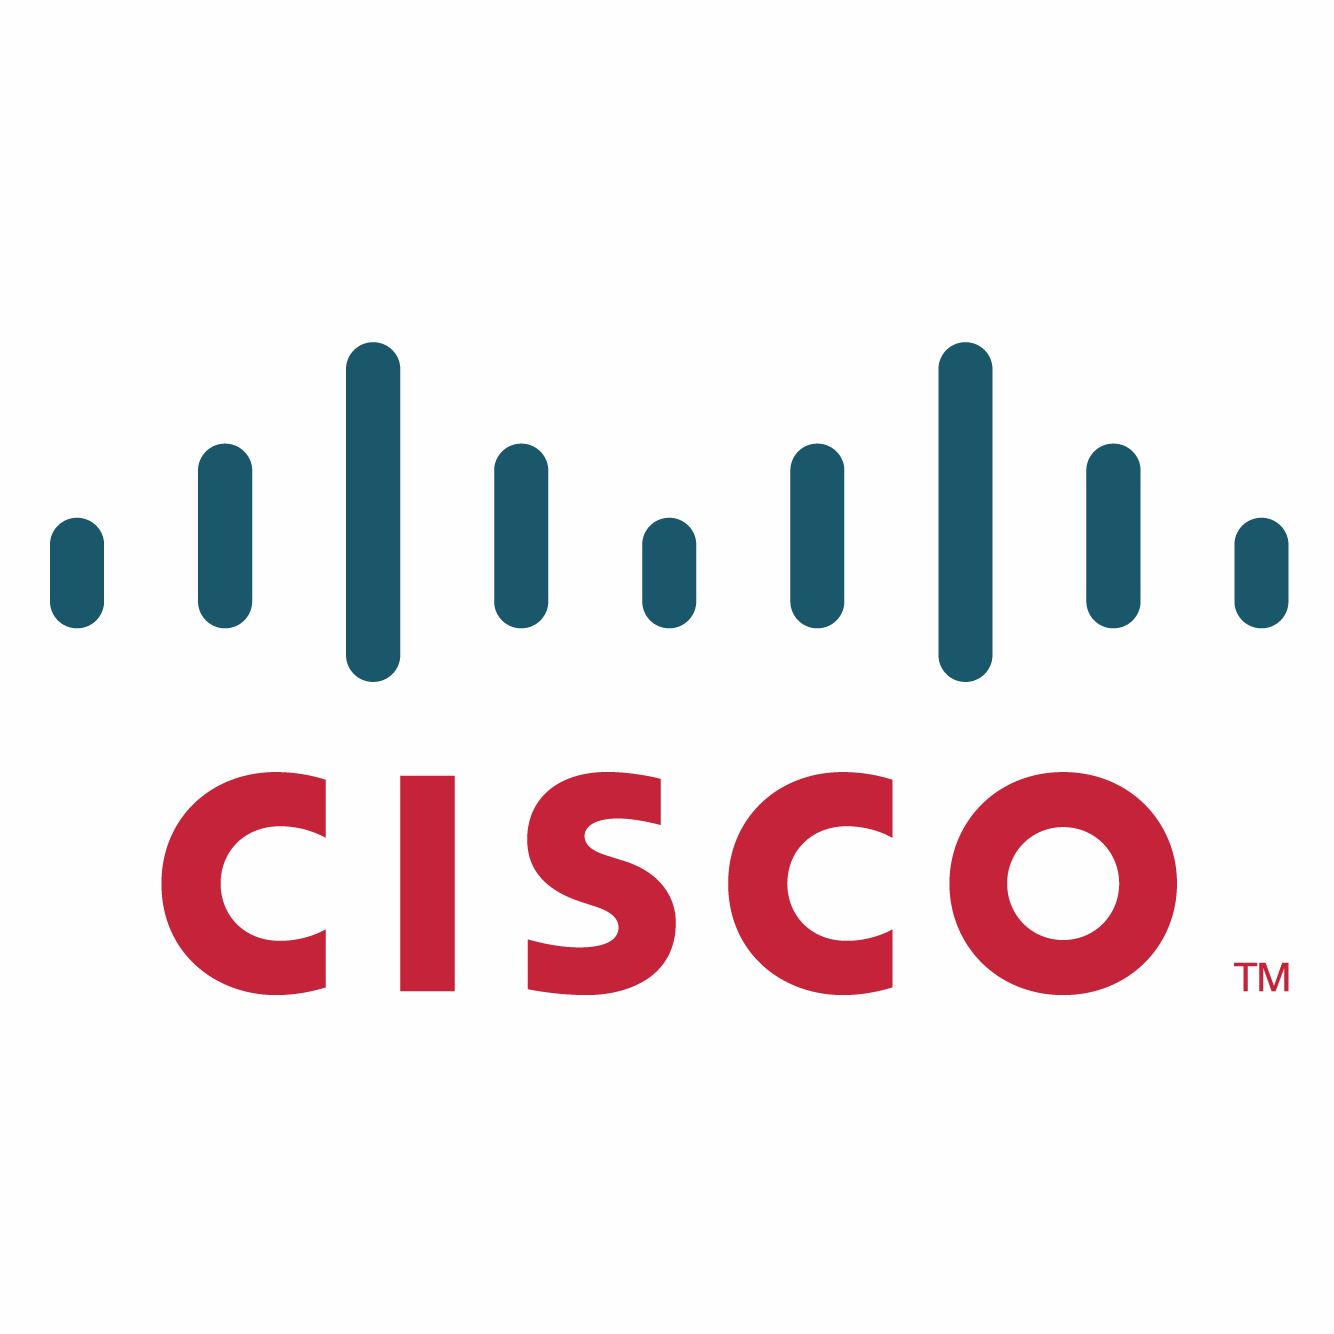 https://securetech.ae/wp-content/uploads/2019/02/04.CISCO_.png